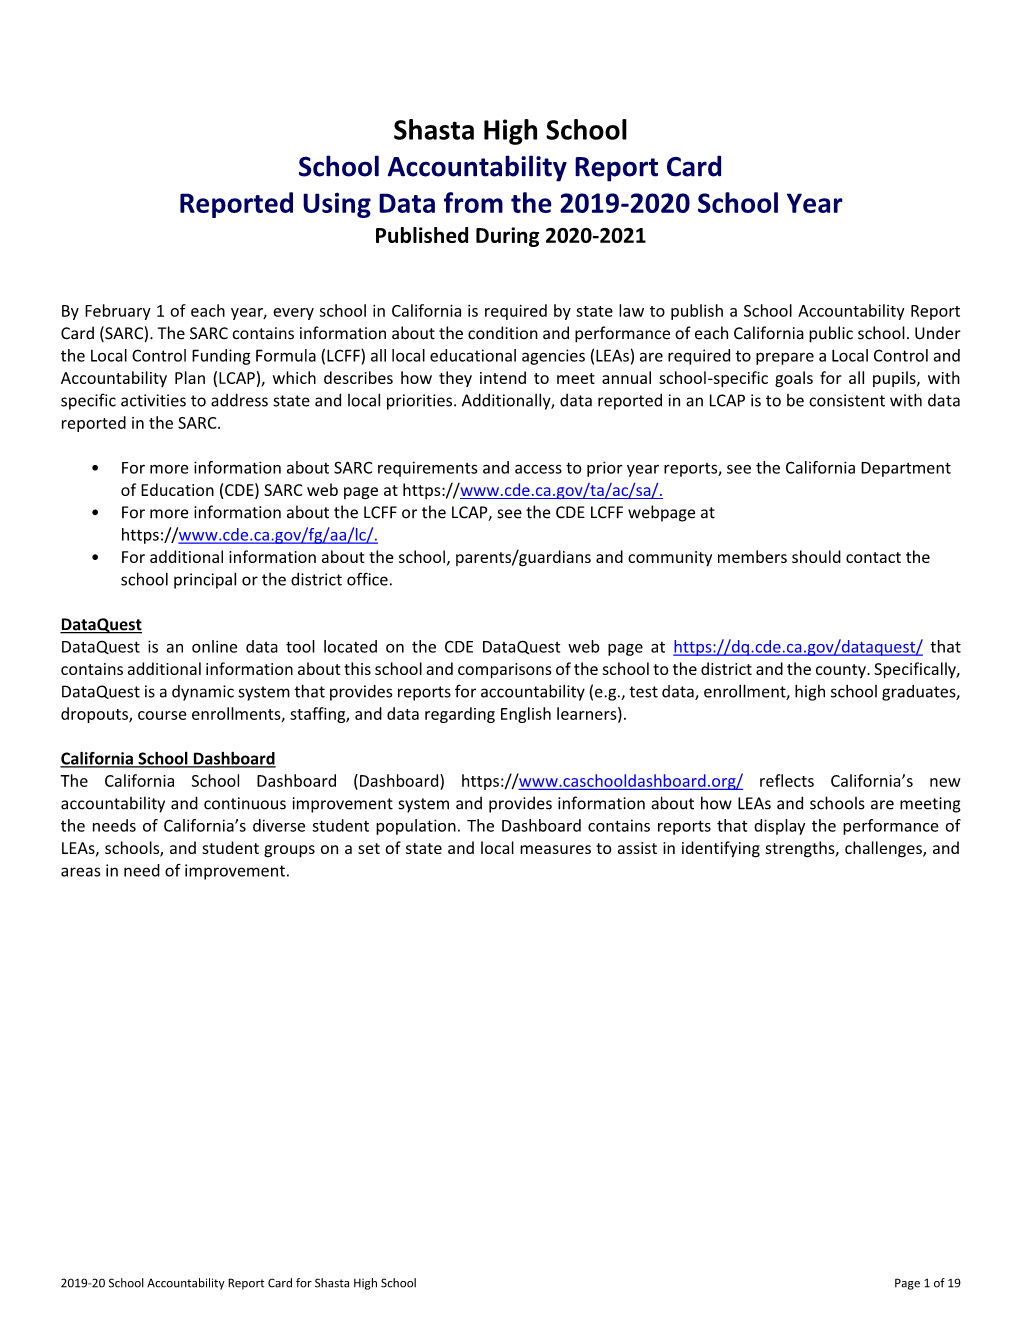 2020-21 School Accountability Report Card